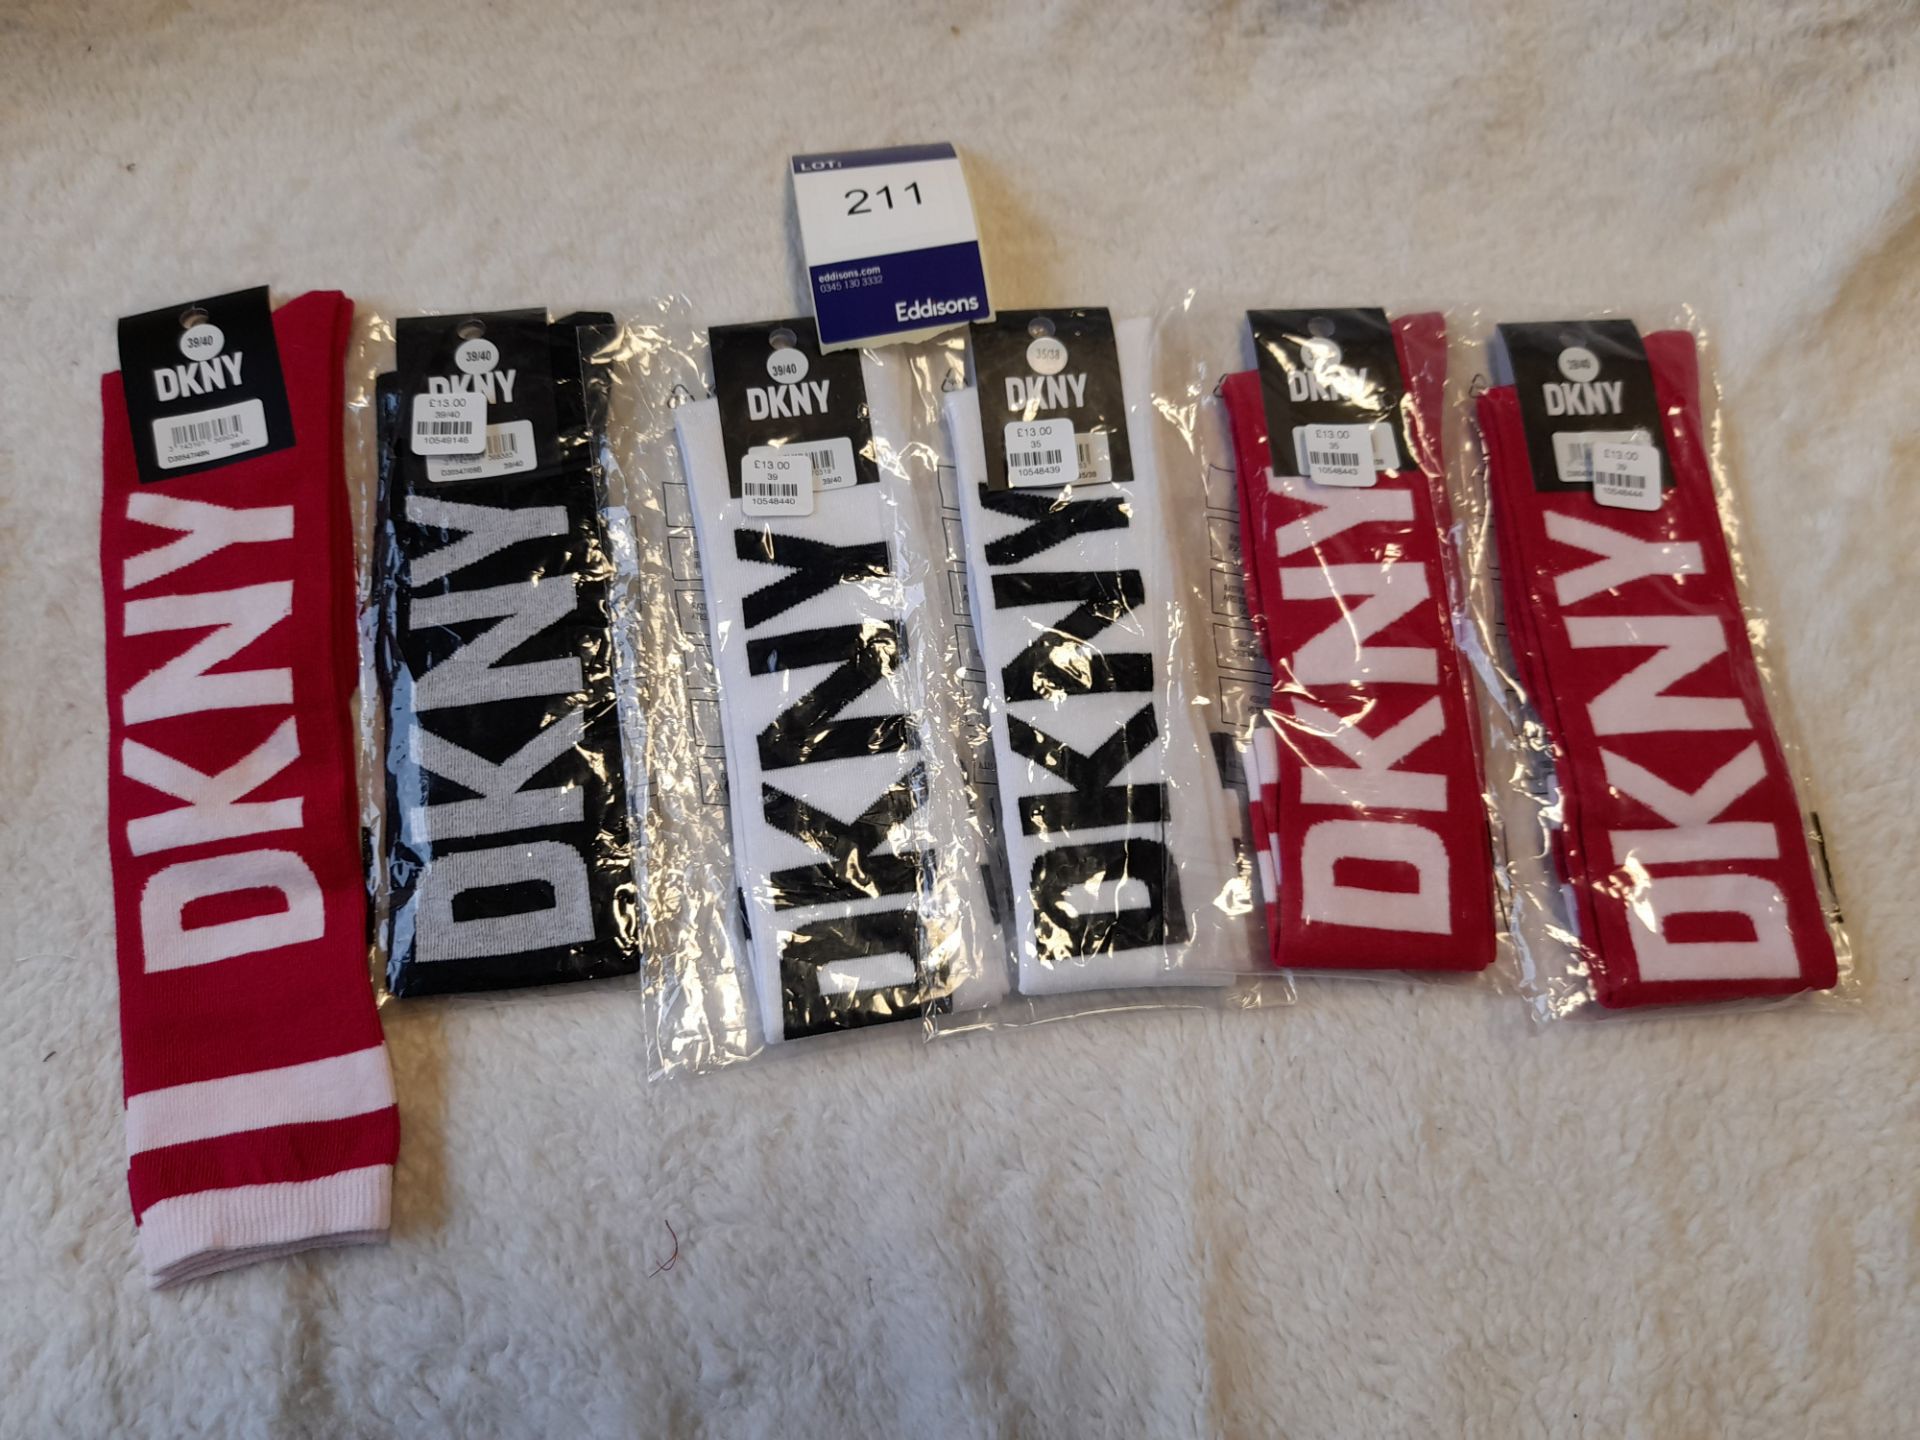 6 x Pairs of DKNY Knee High Socks in black, white - Image 2 of 3